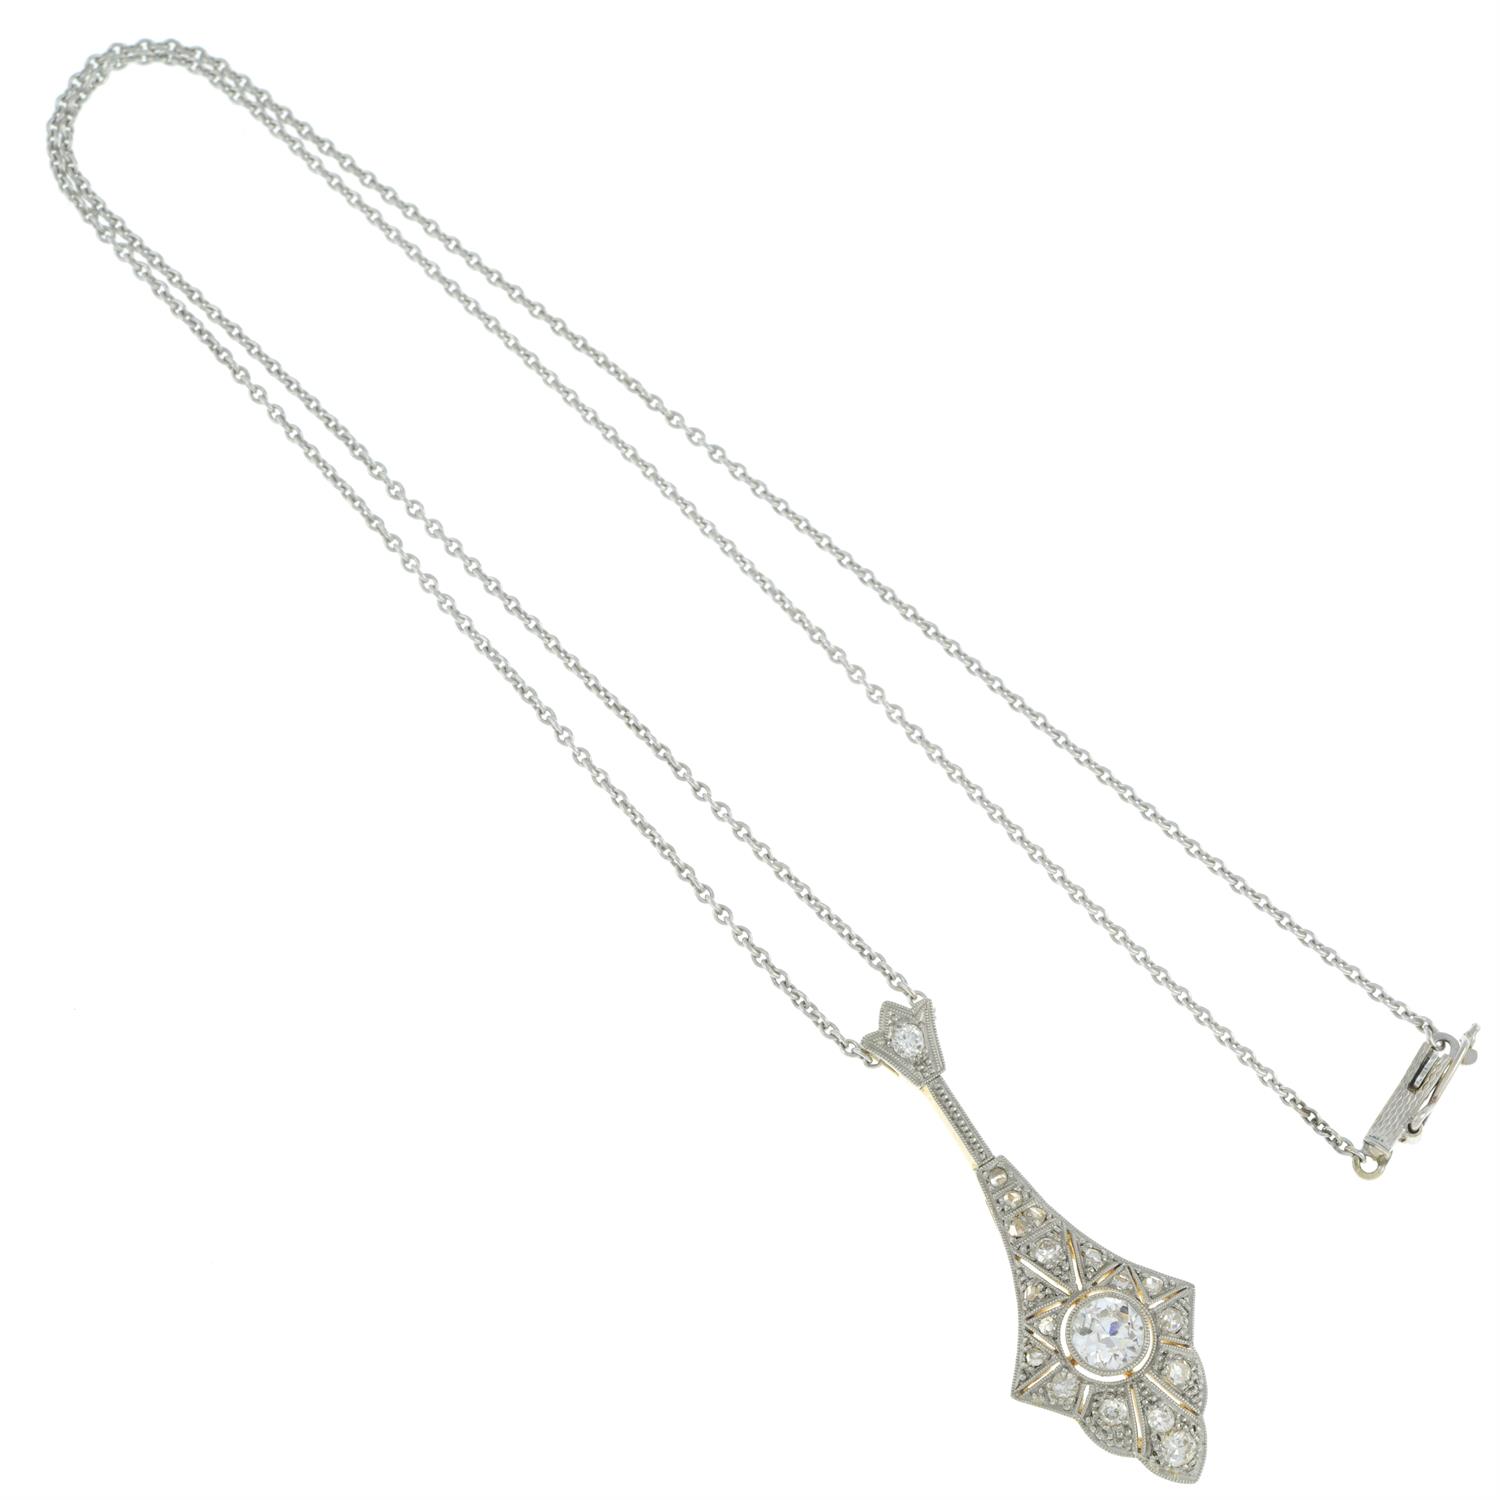 Diamond pendant, on chain - Image 5 of 6